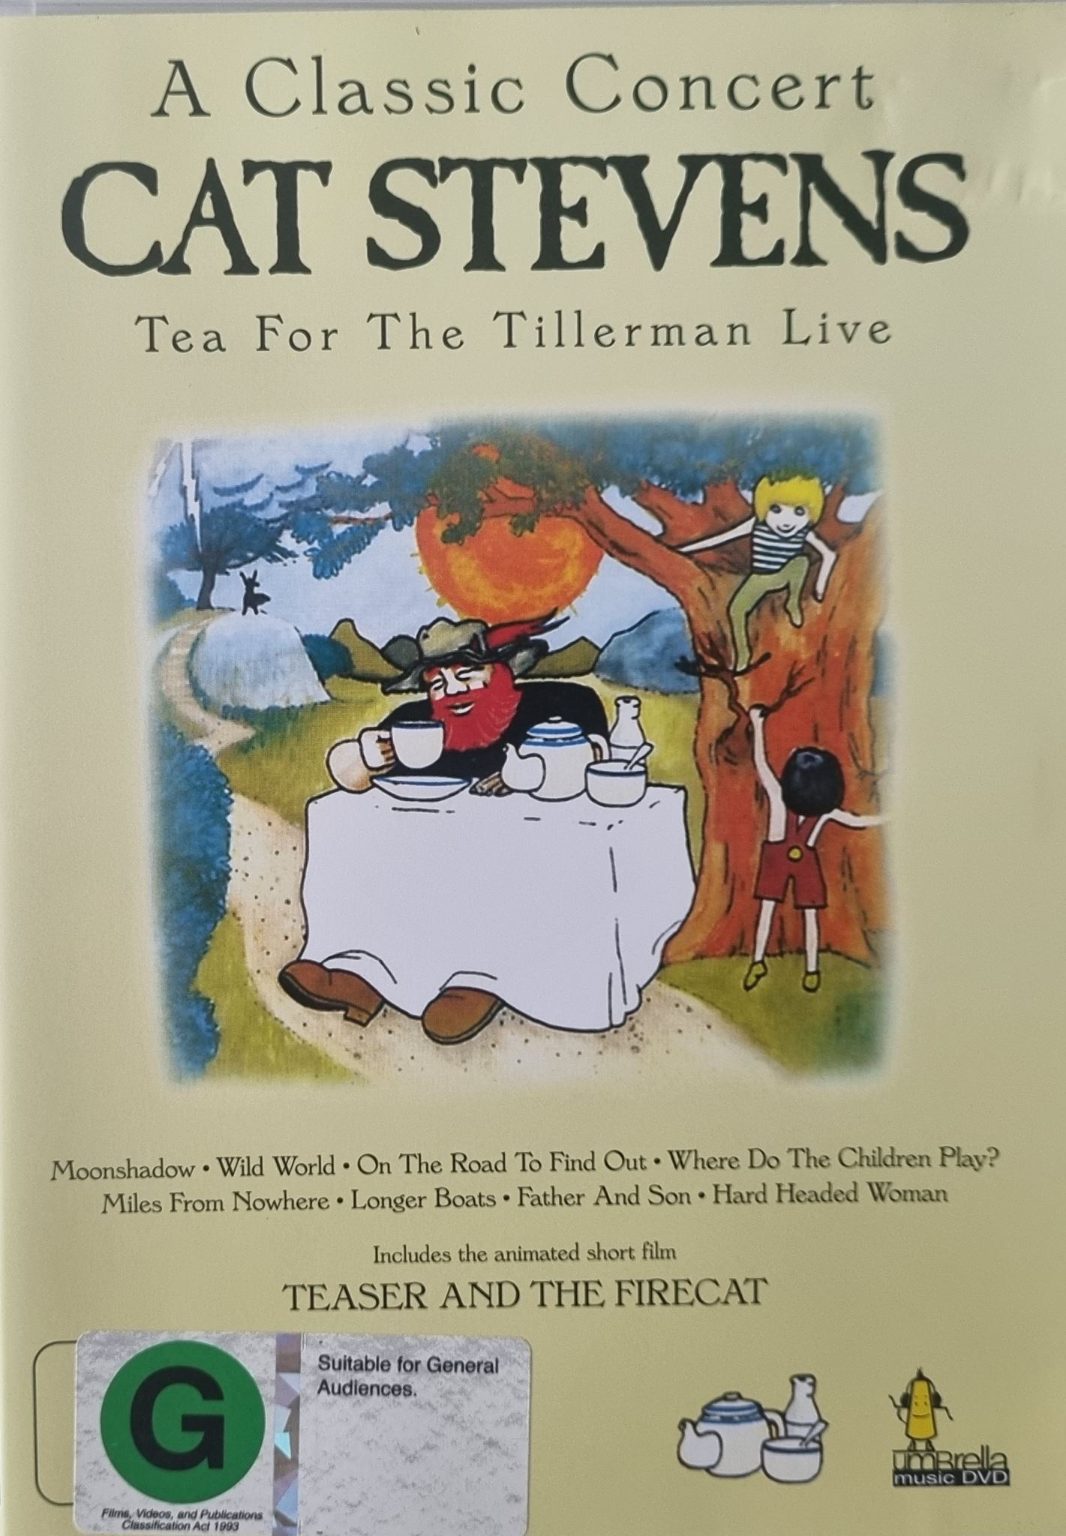 Cat Stevens - Tea for the Tillerman Live (A Classic Concert)